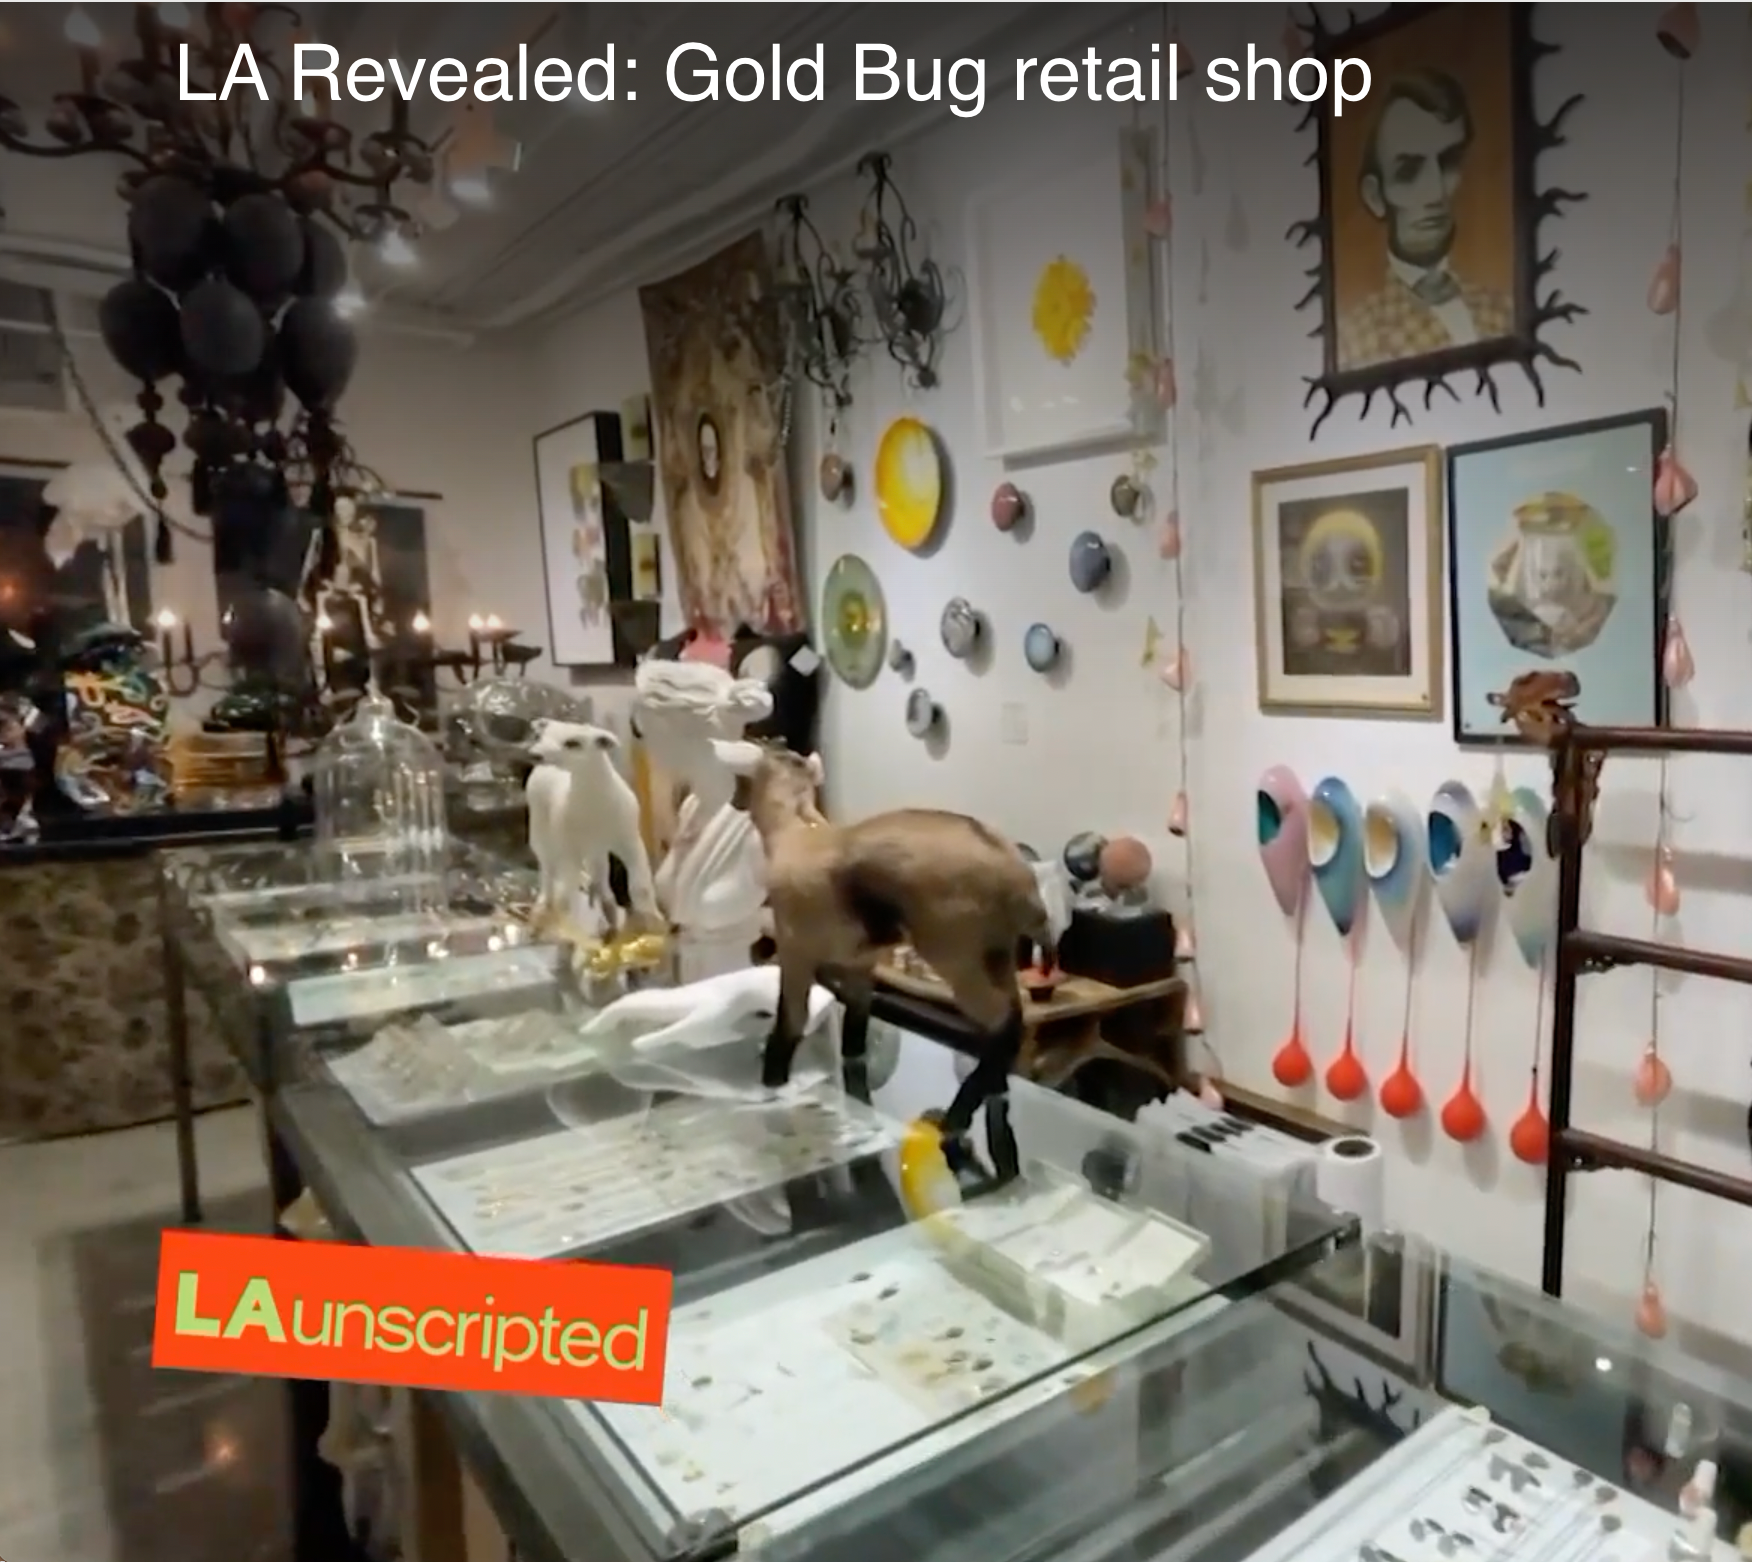 KTLA video segment "LA Revealed" on LA Unscripted: Gold Bug the Retail Shop